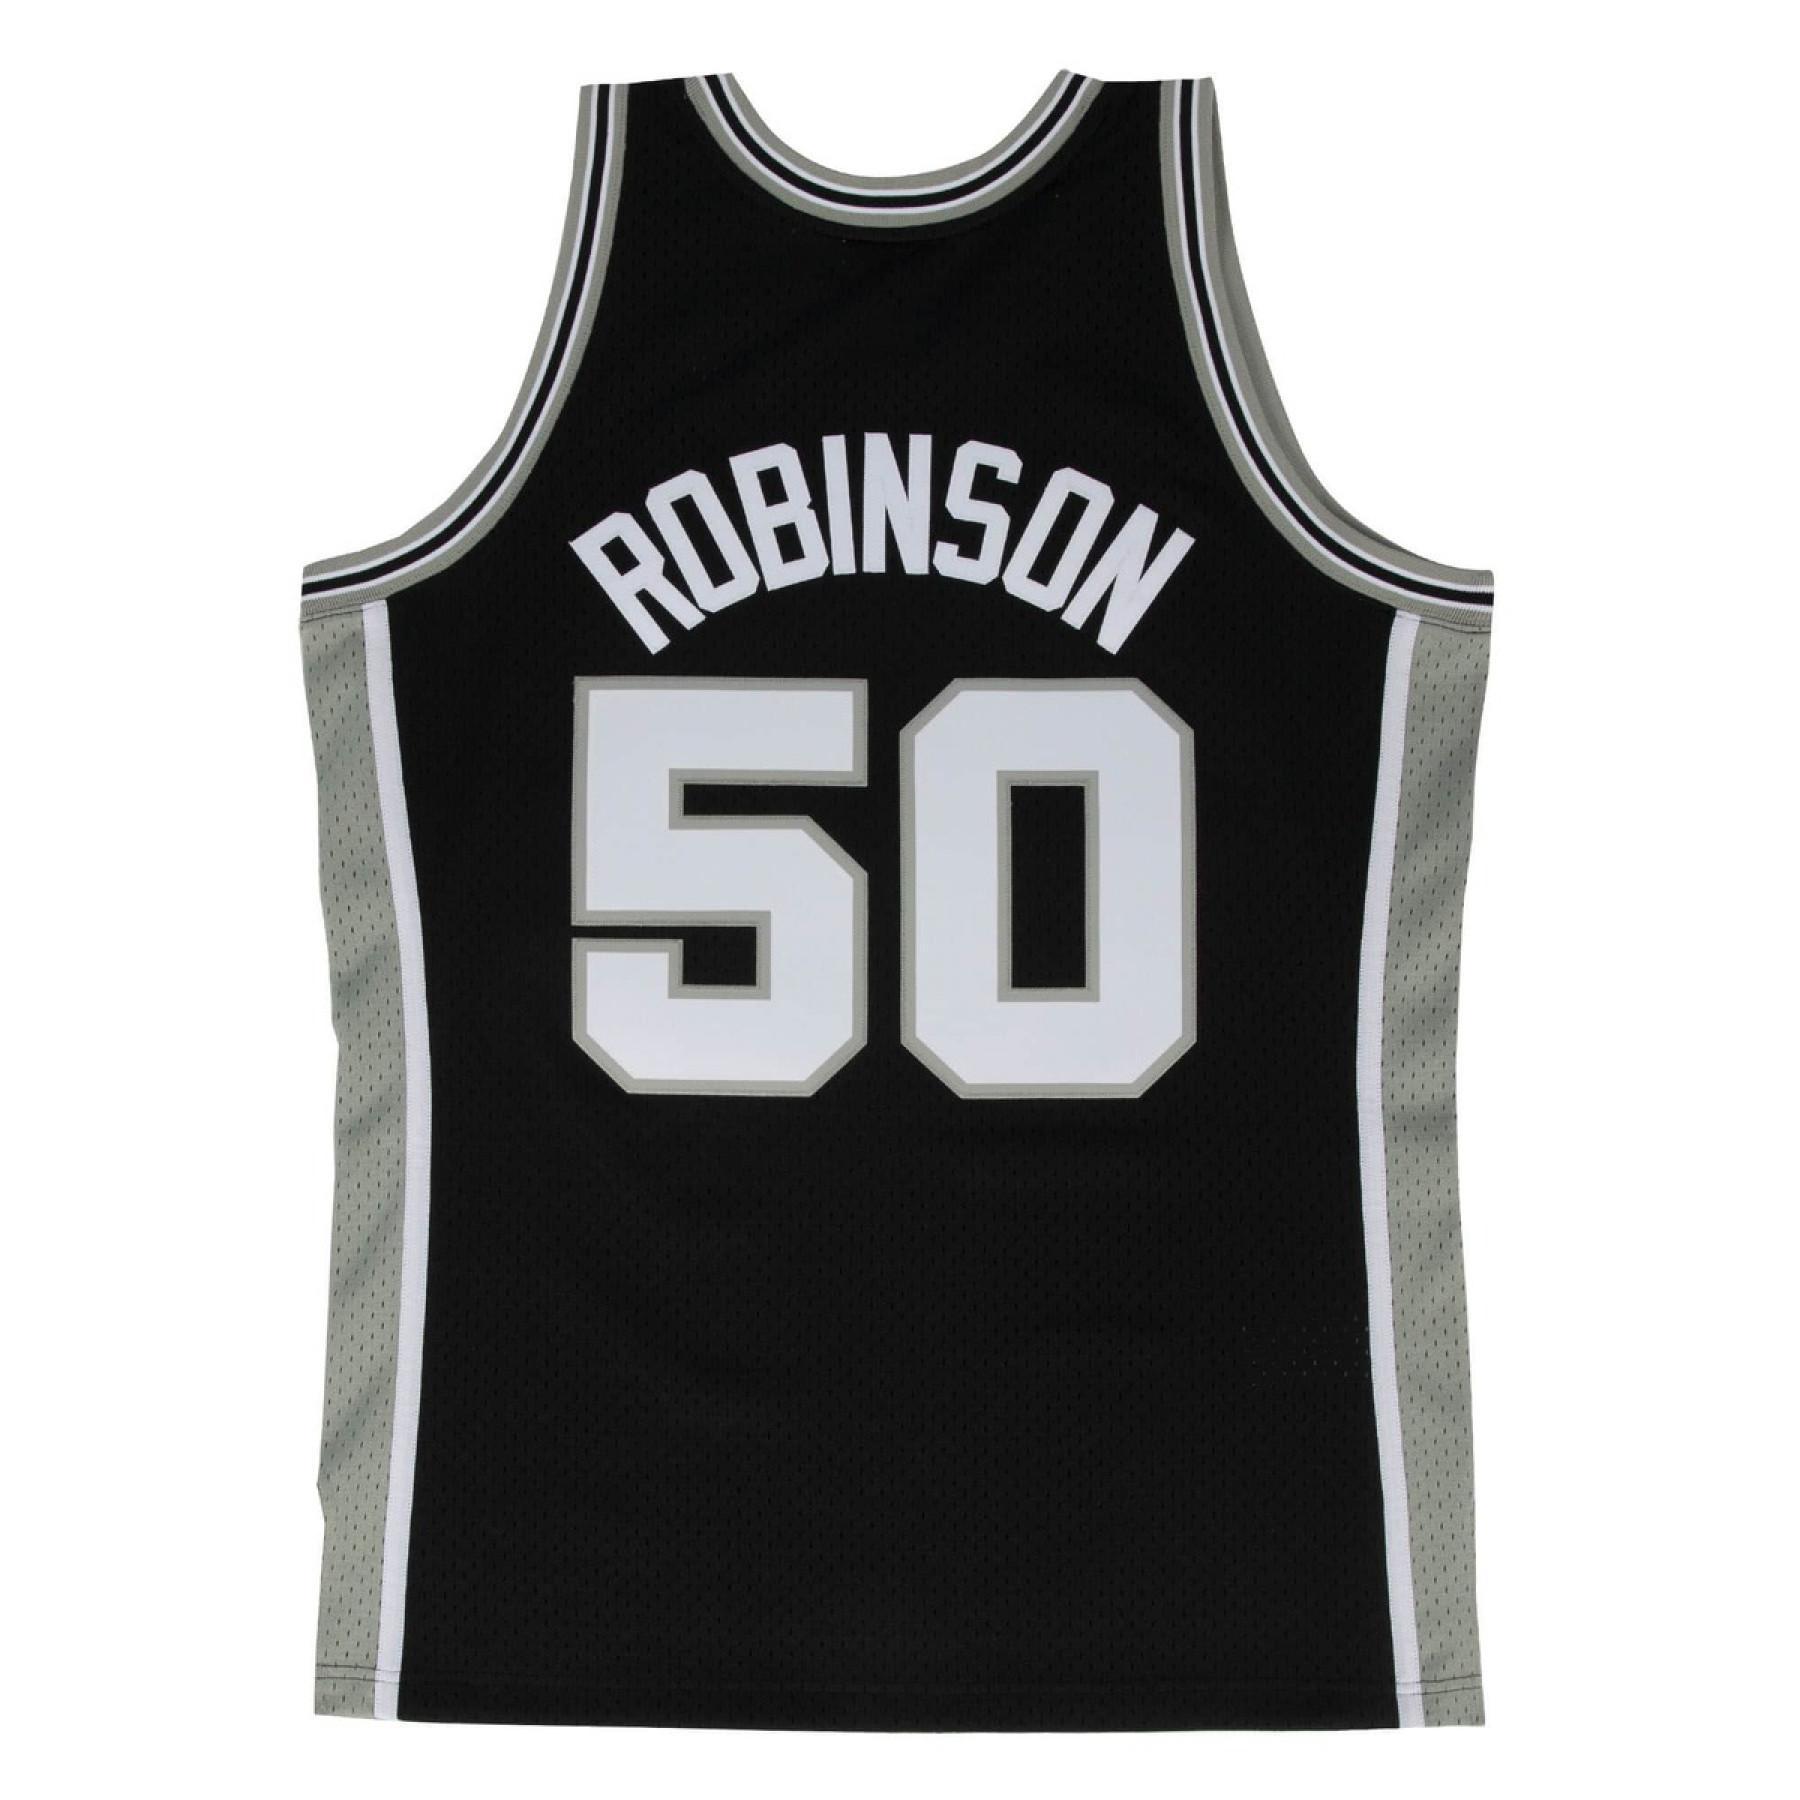 Maillot San Antonio Spurs David Robinson